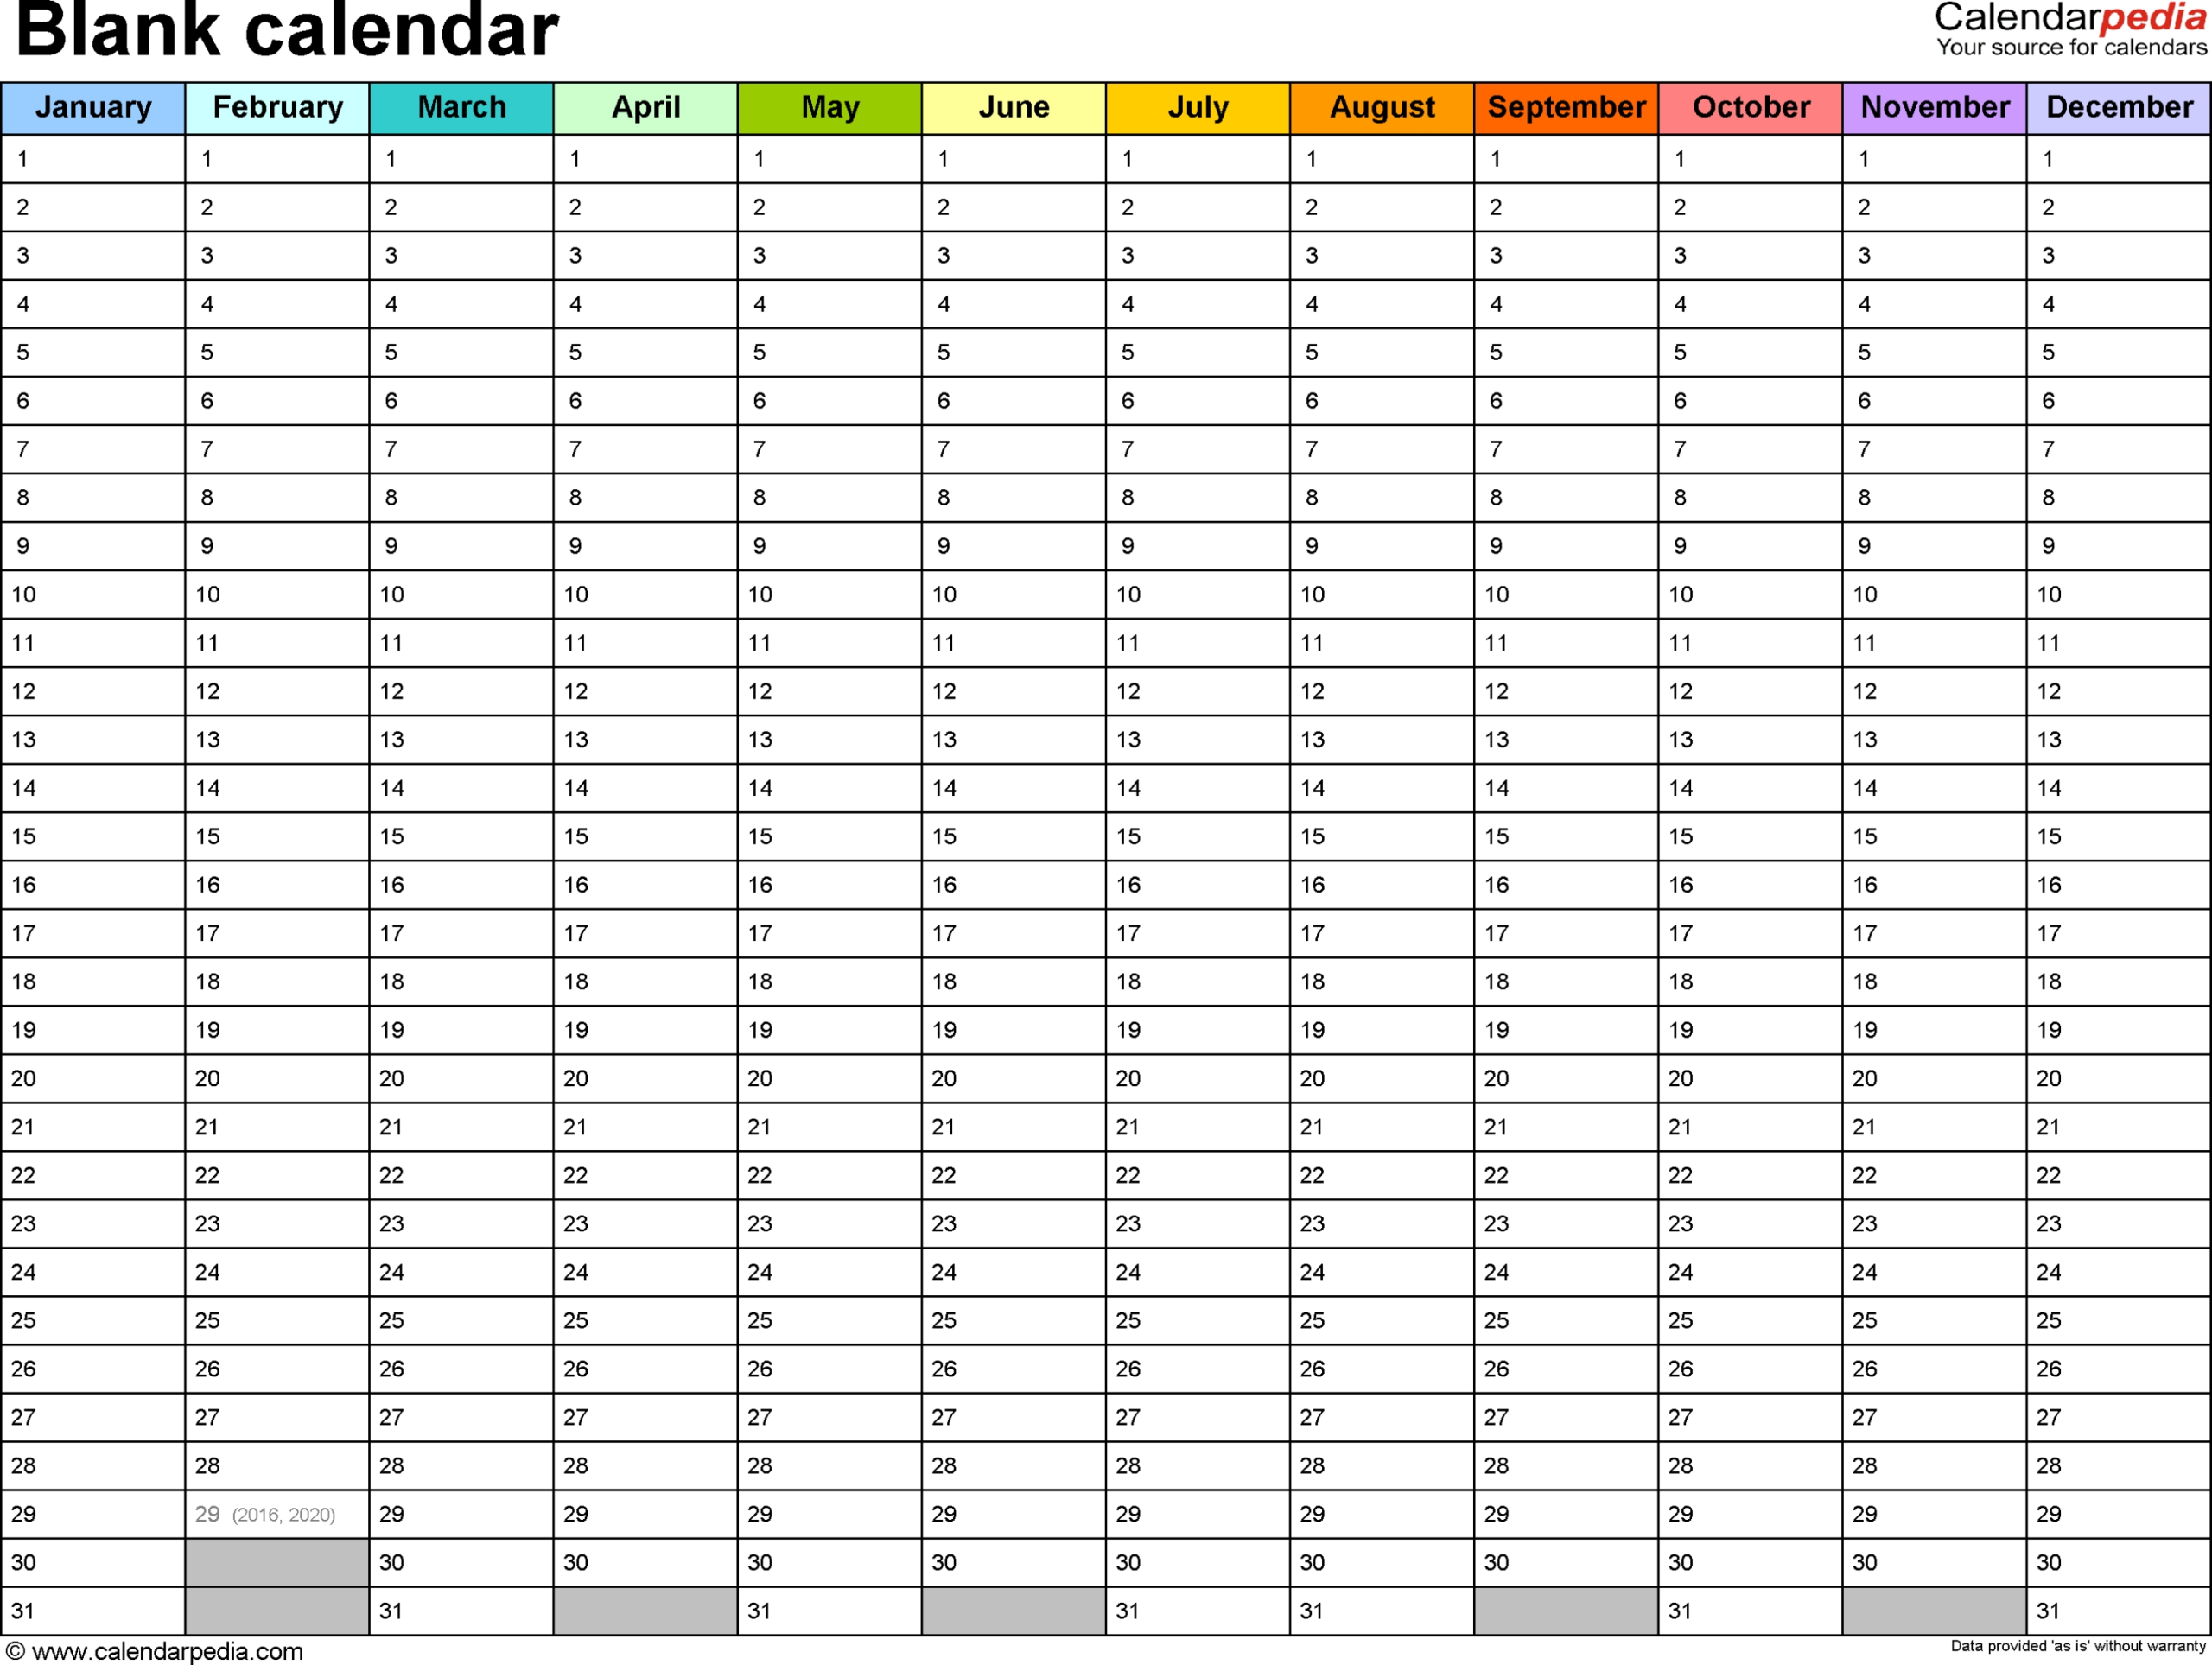 Calendar Blank Free | Calendar Printable Free regarding Blank Calender Template